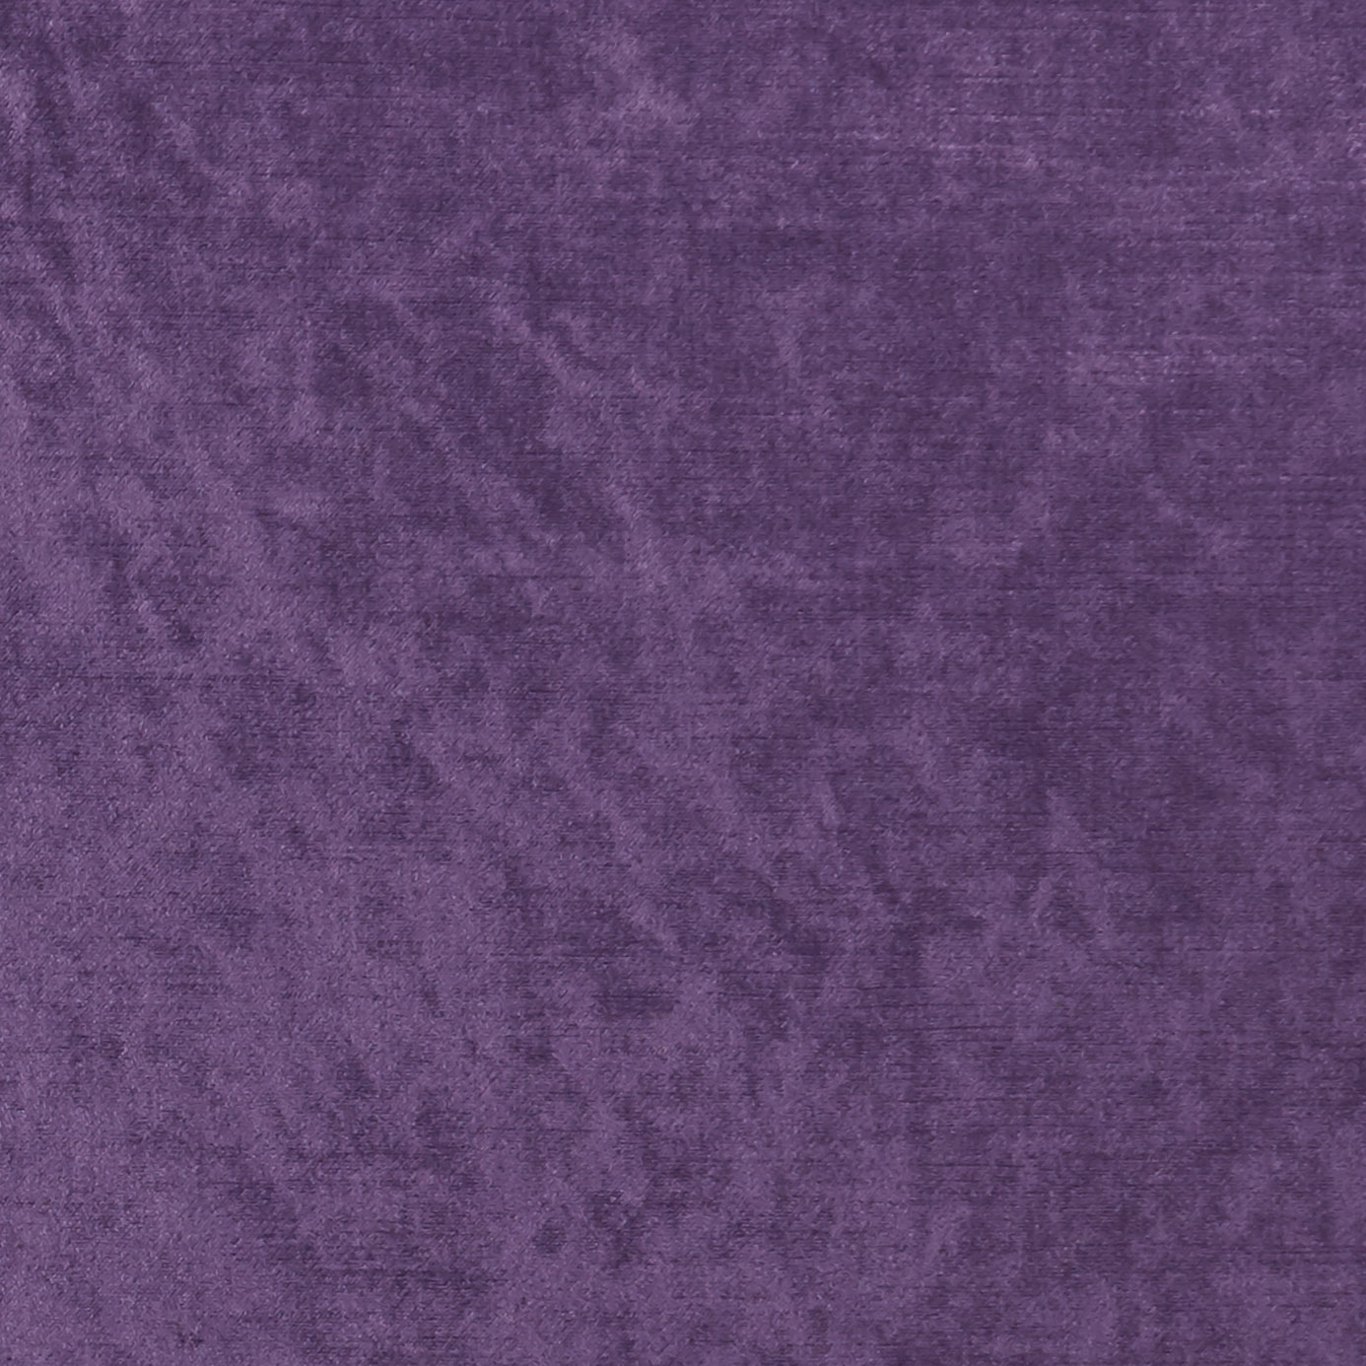 Allure Grape Fabric by CNC